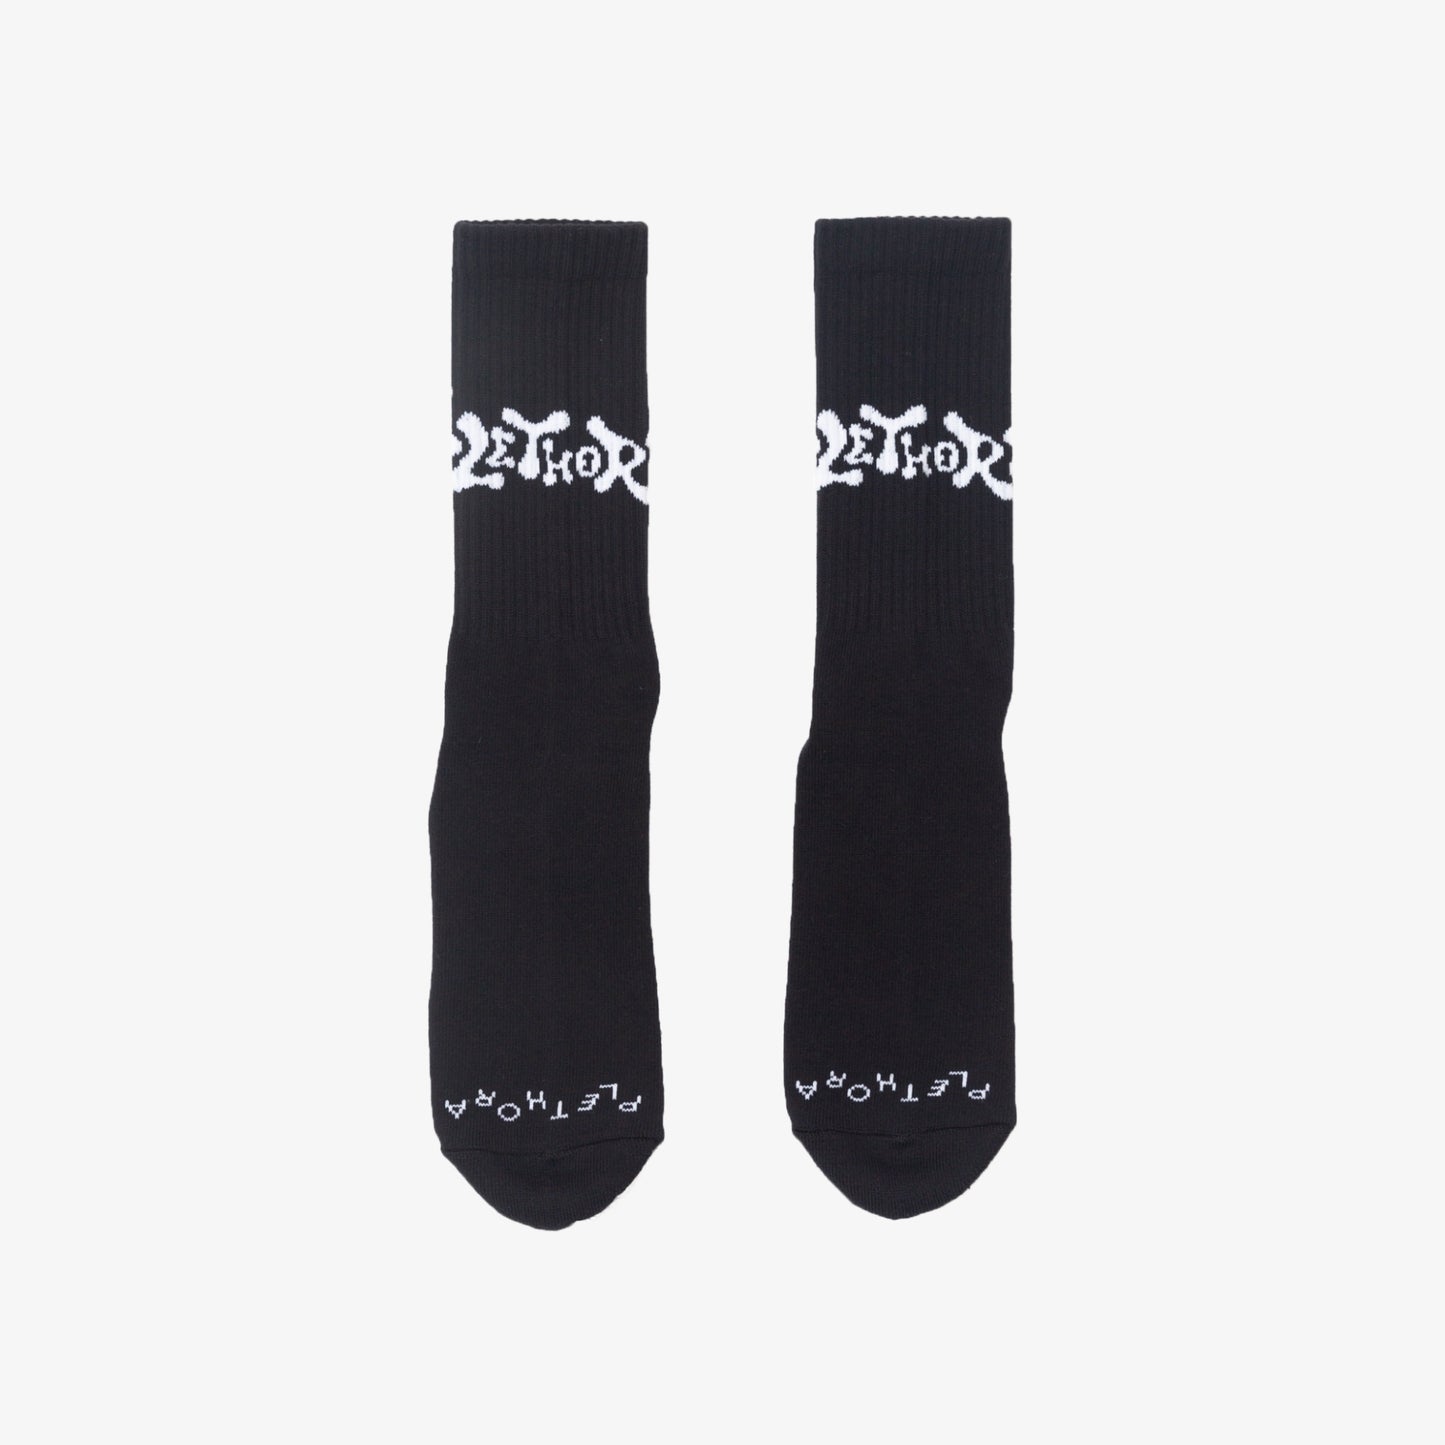 PLETHORA "Wave" Socks - Black / White